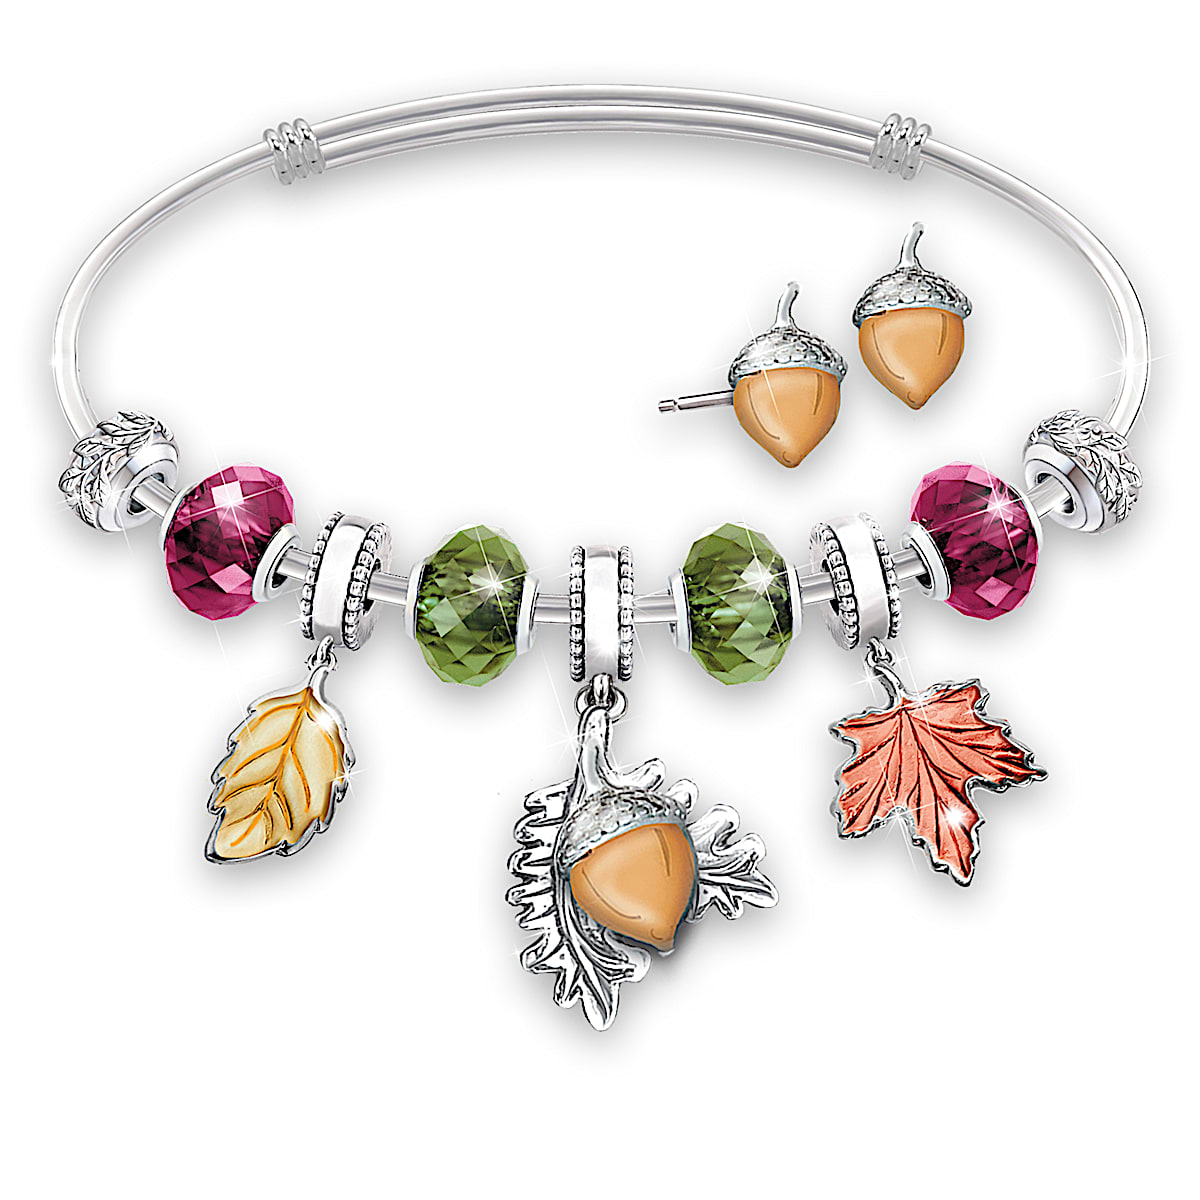 Acorn charm bracelet